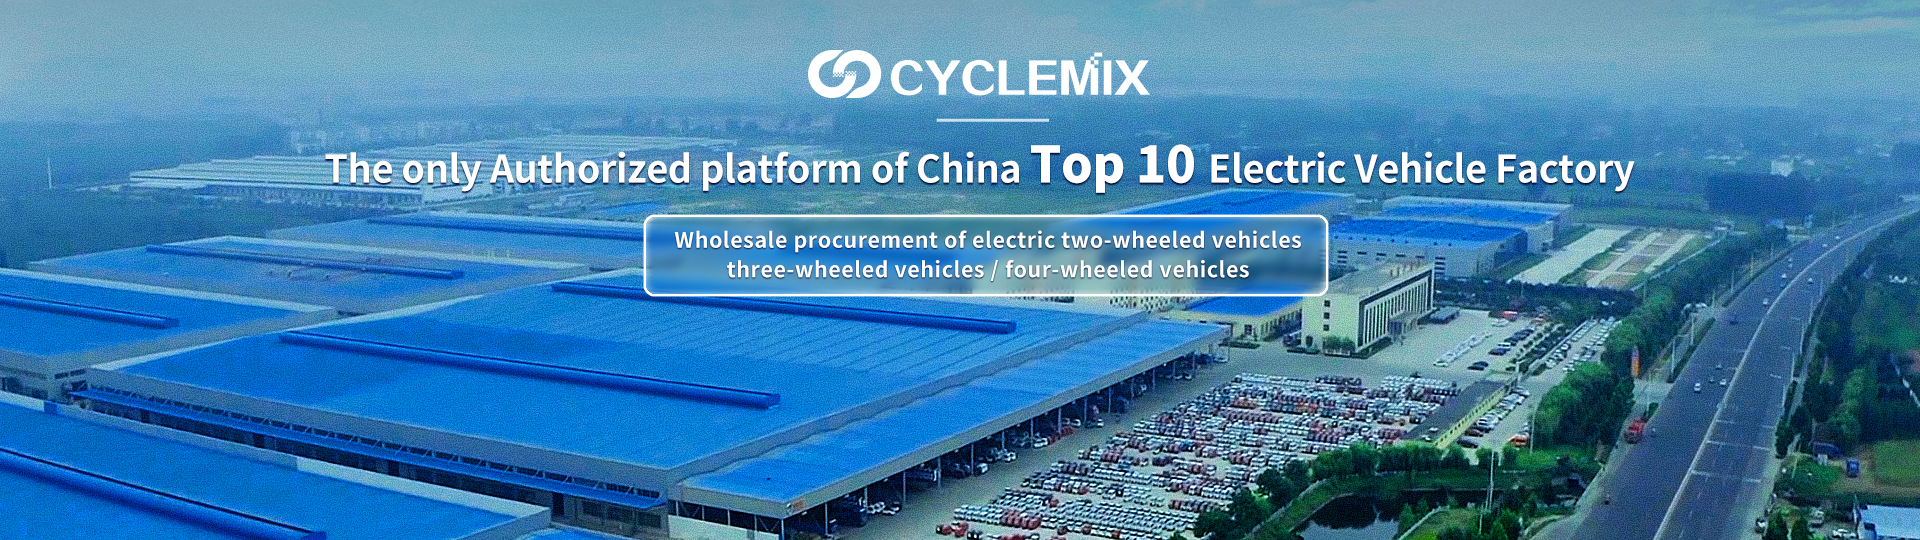 CYCLEMIX Den enda auktoriserade parten/plattformen för China Top 10 Electric Vehicle Factory